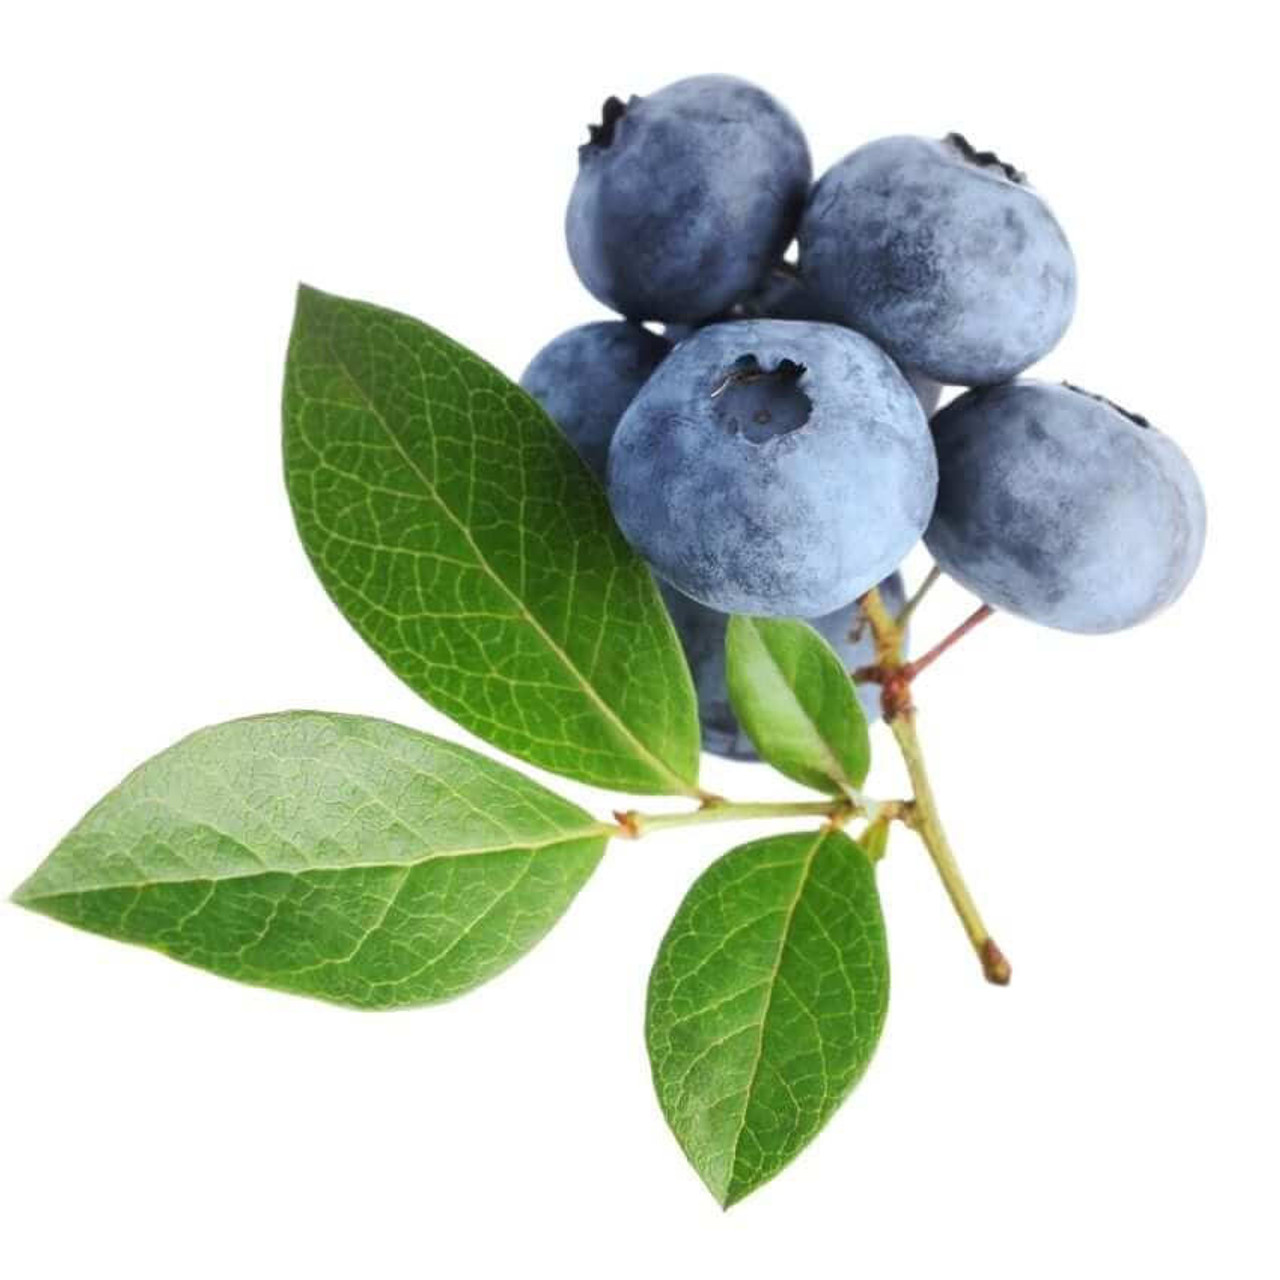  Rainforest supply Blueberry Powder Freeze Dried 